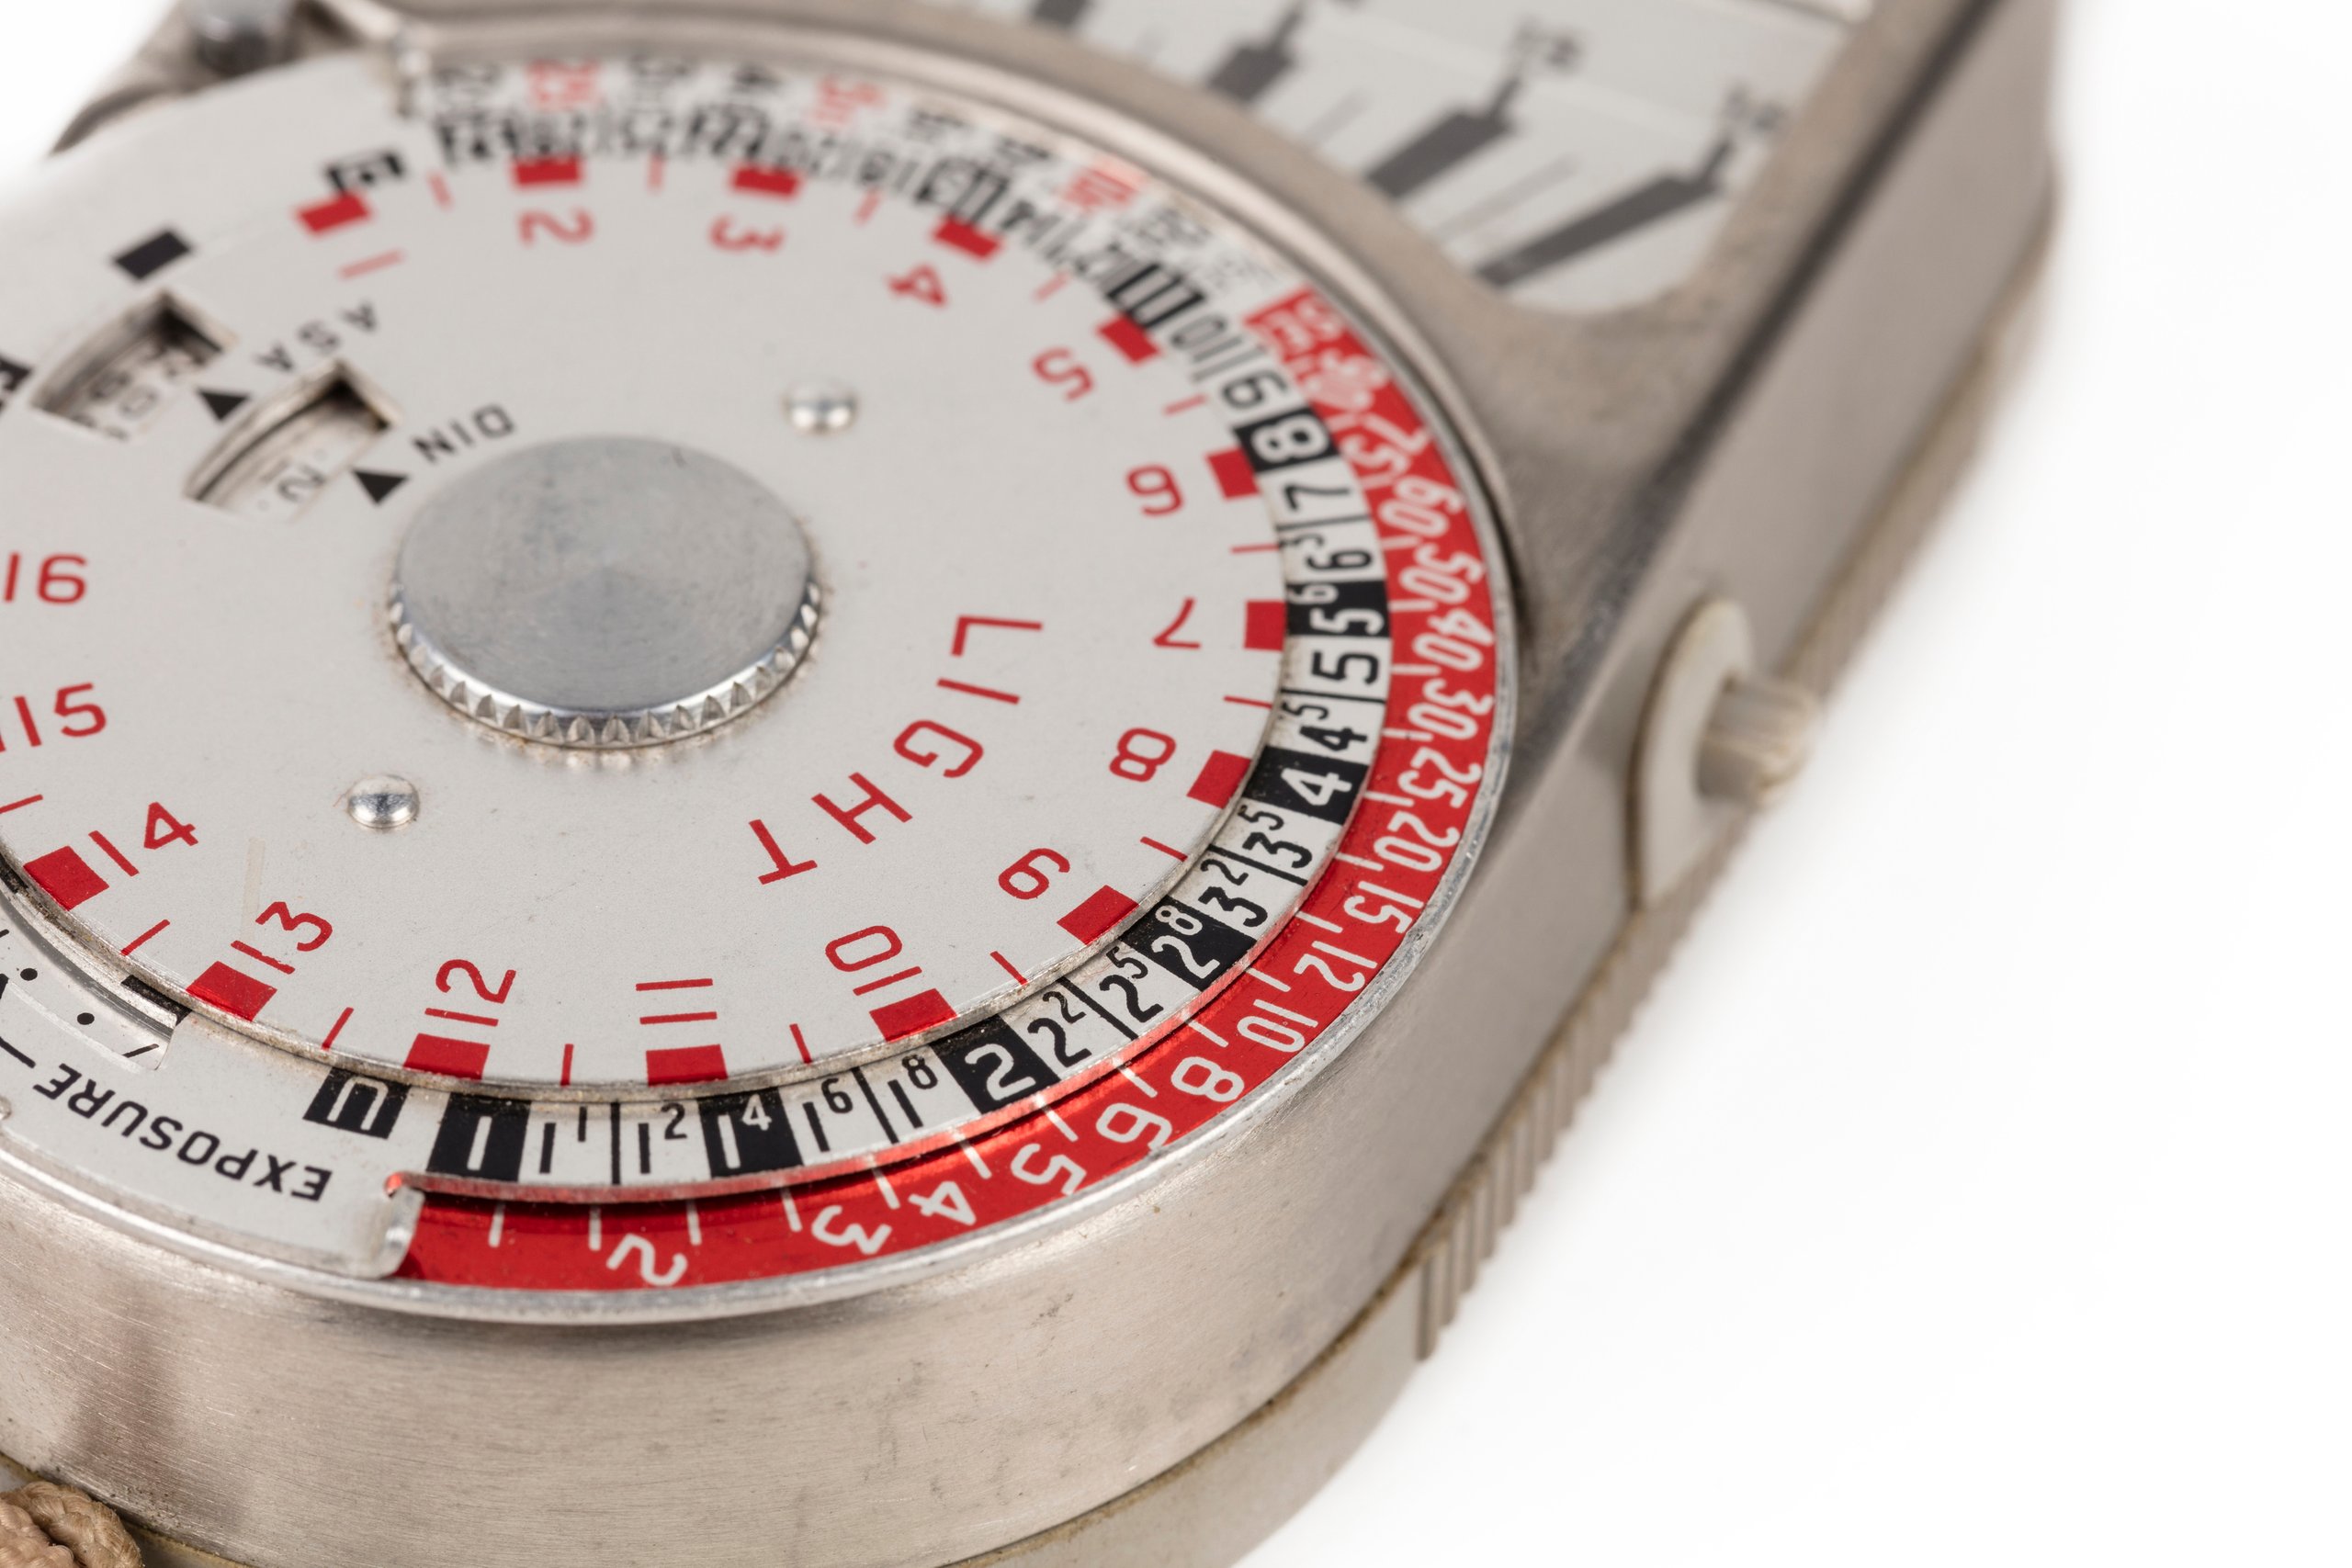 Exposure meter, 'Weston Master V', model S461-5